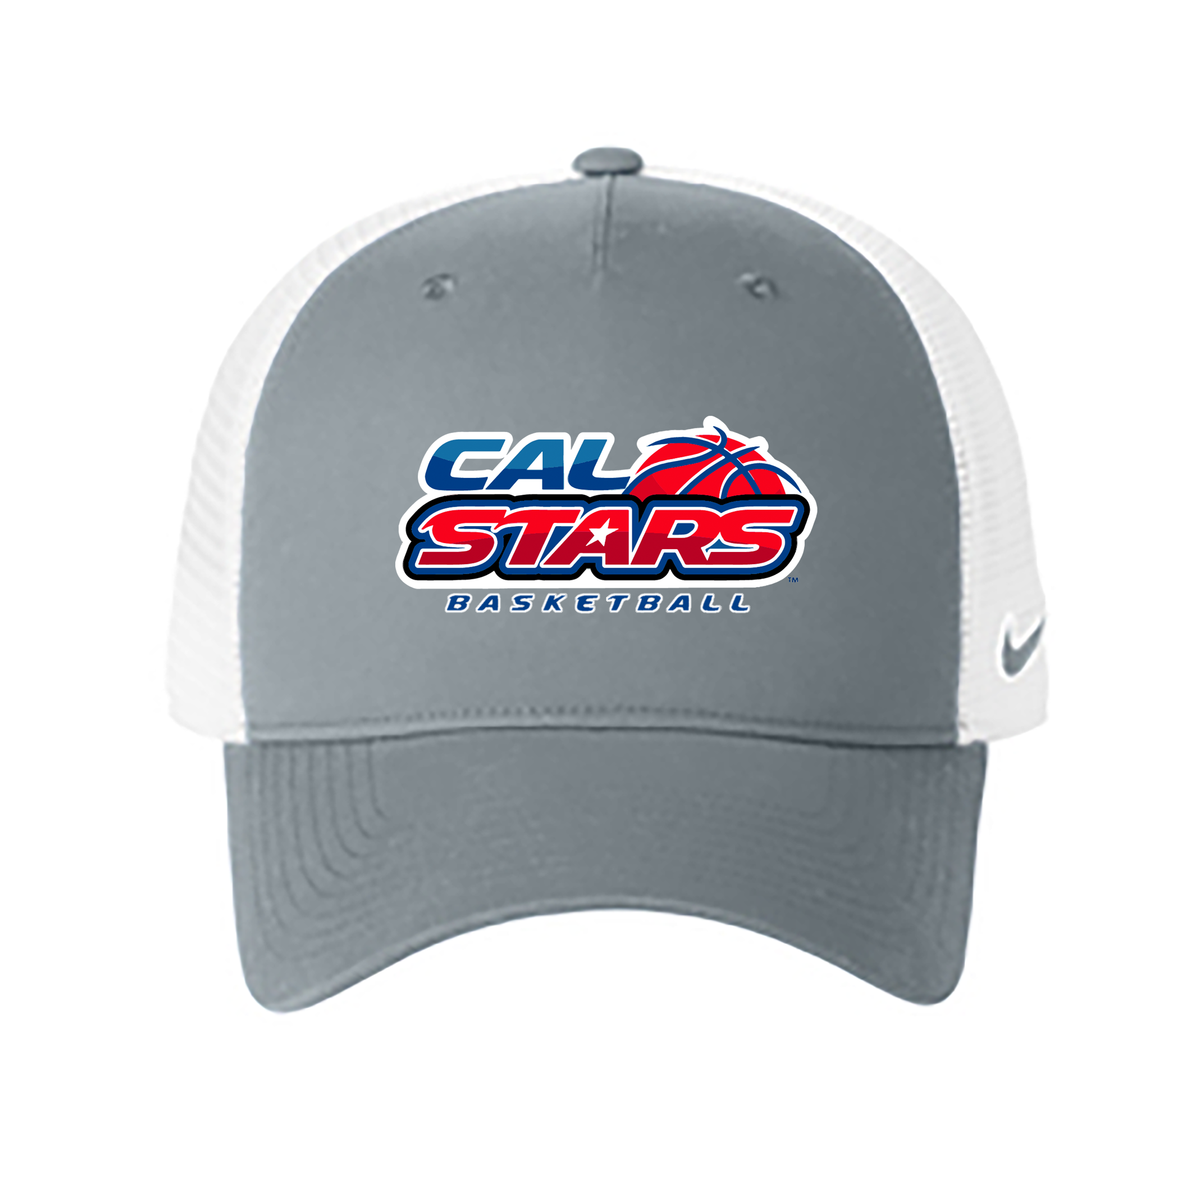 Cal Stars Basketball Nike Snapback Mesh Trucker Cap